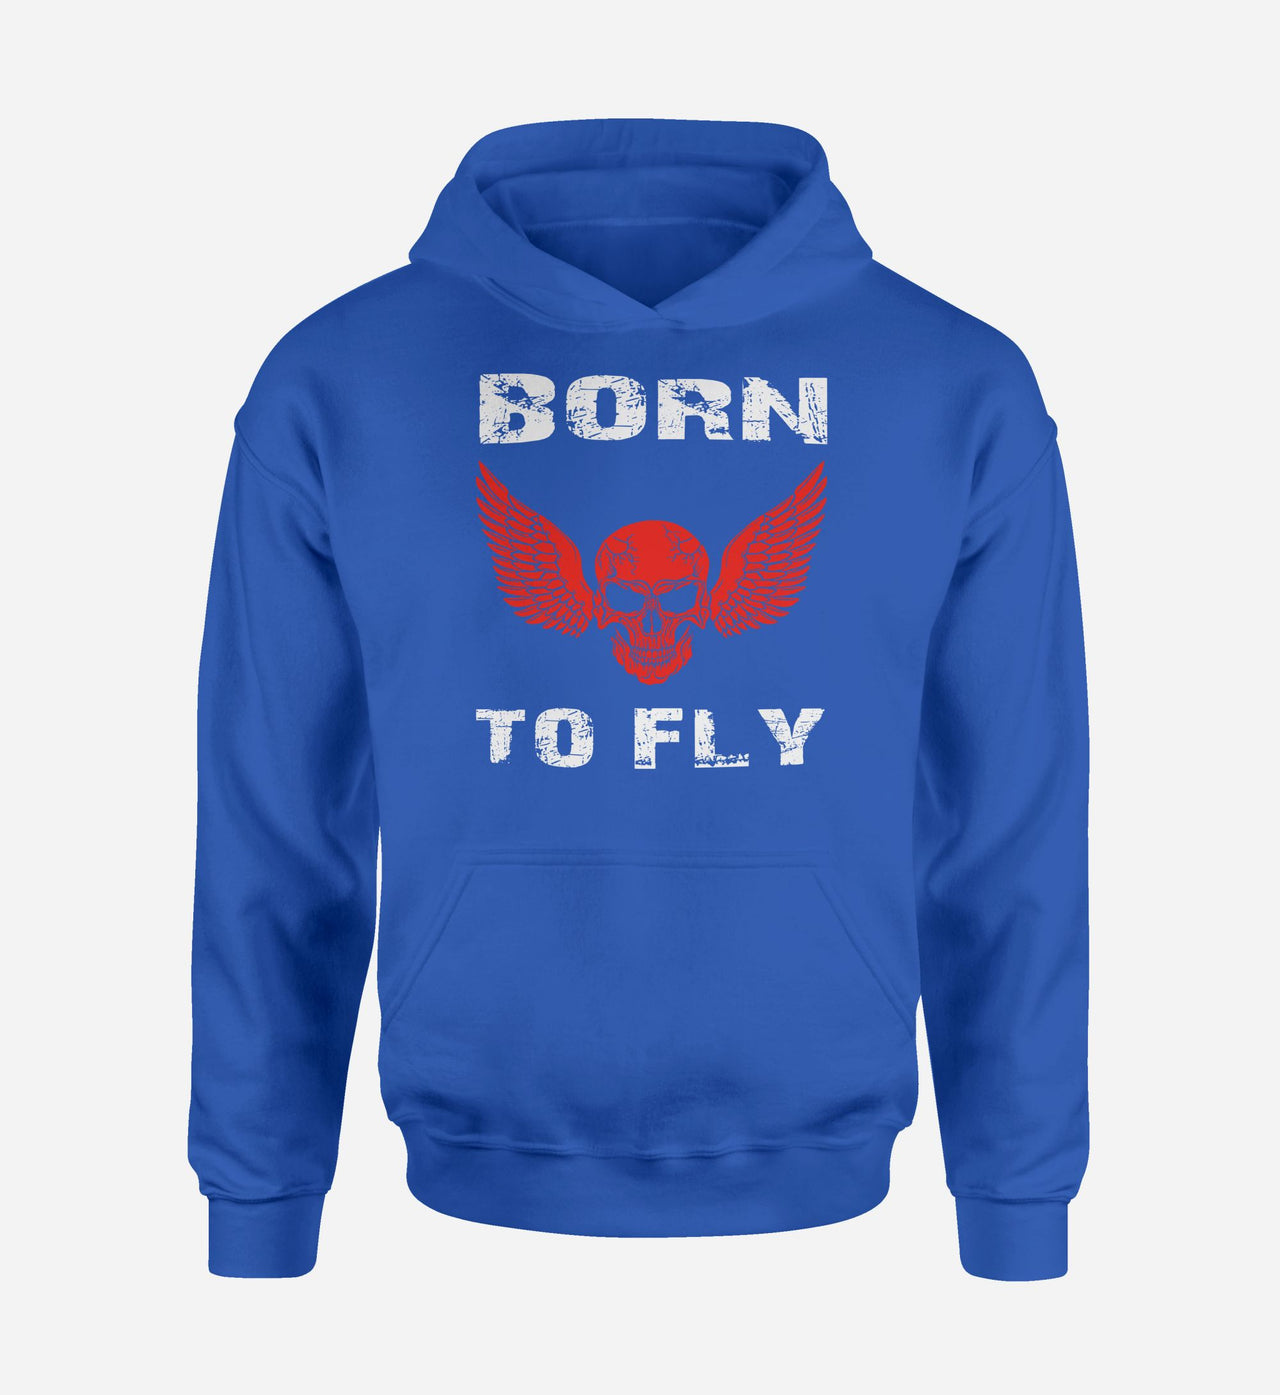 Born To Fly SKELETON Designed Hoodies